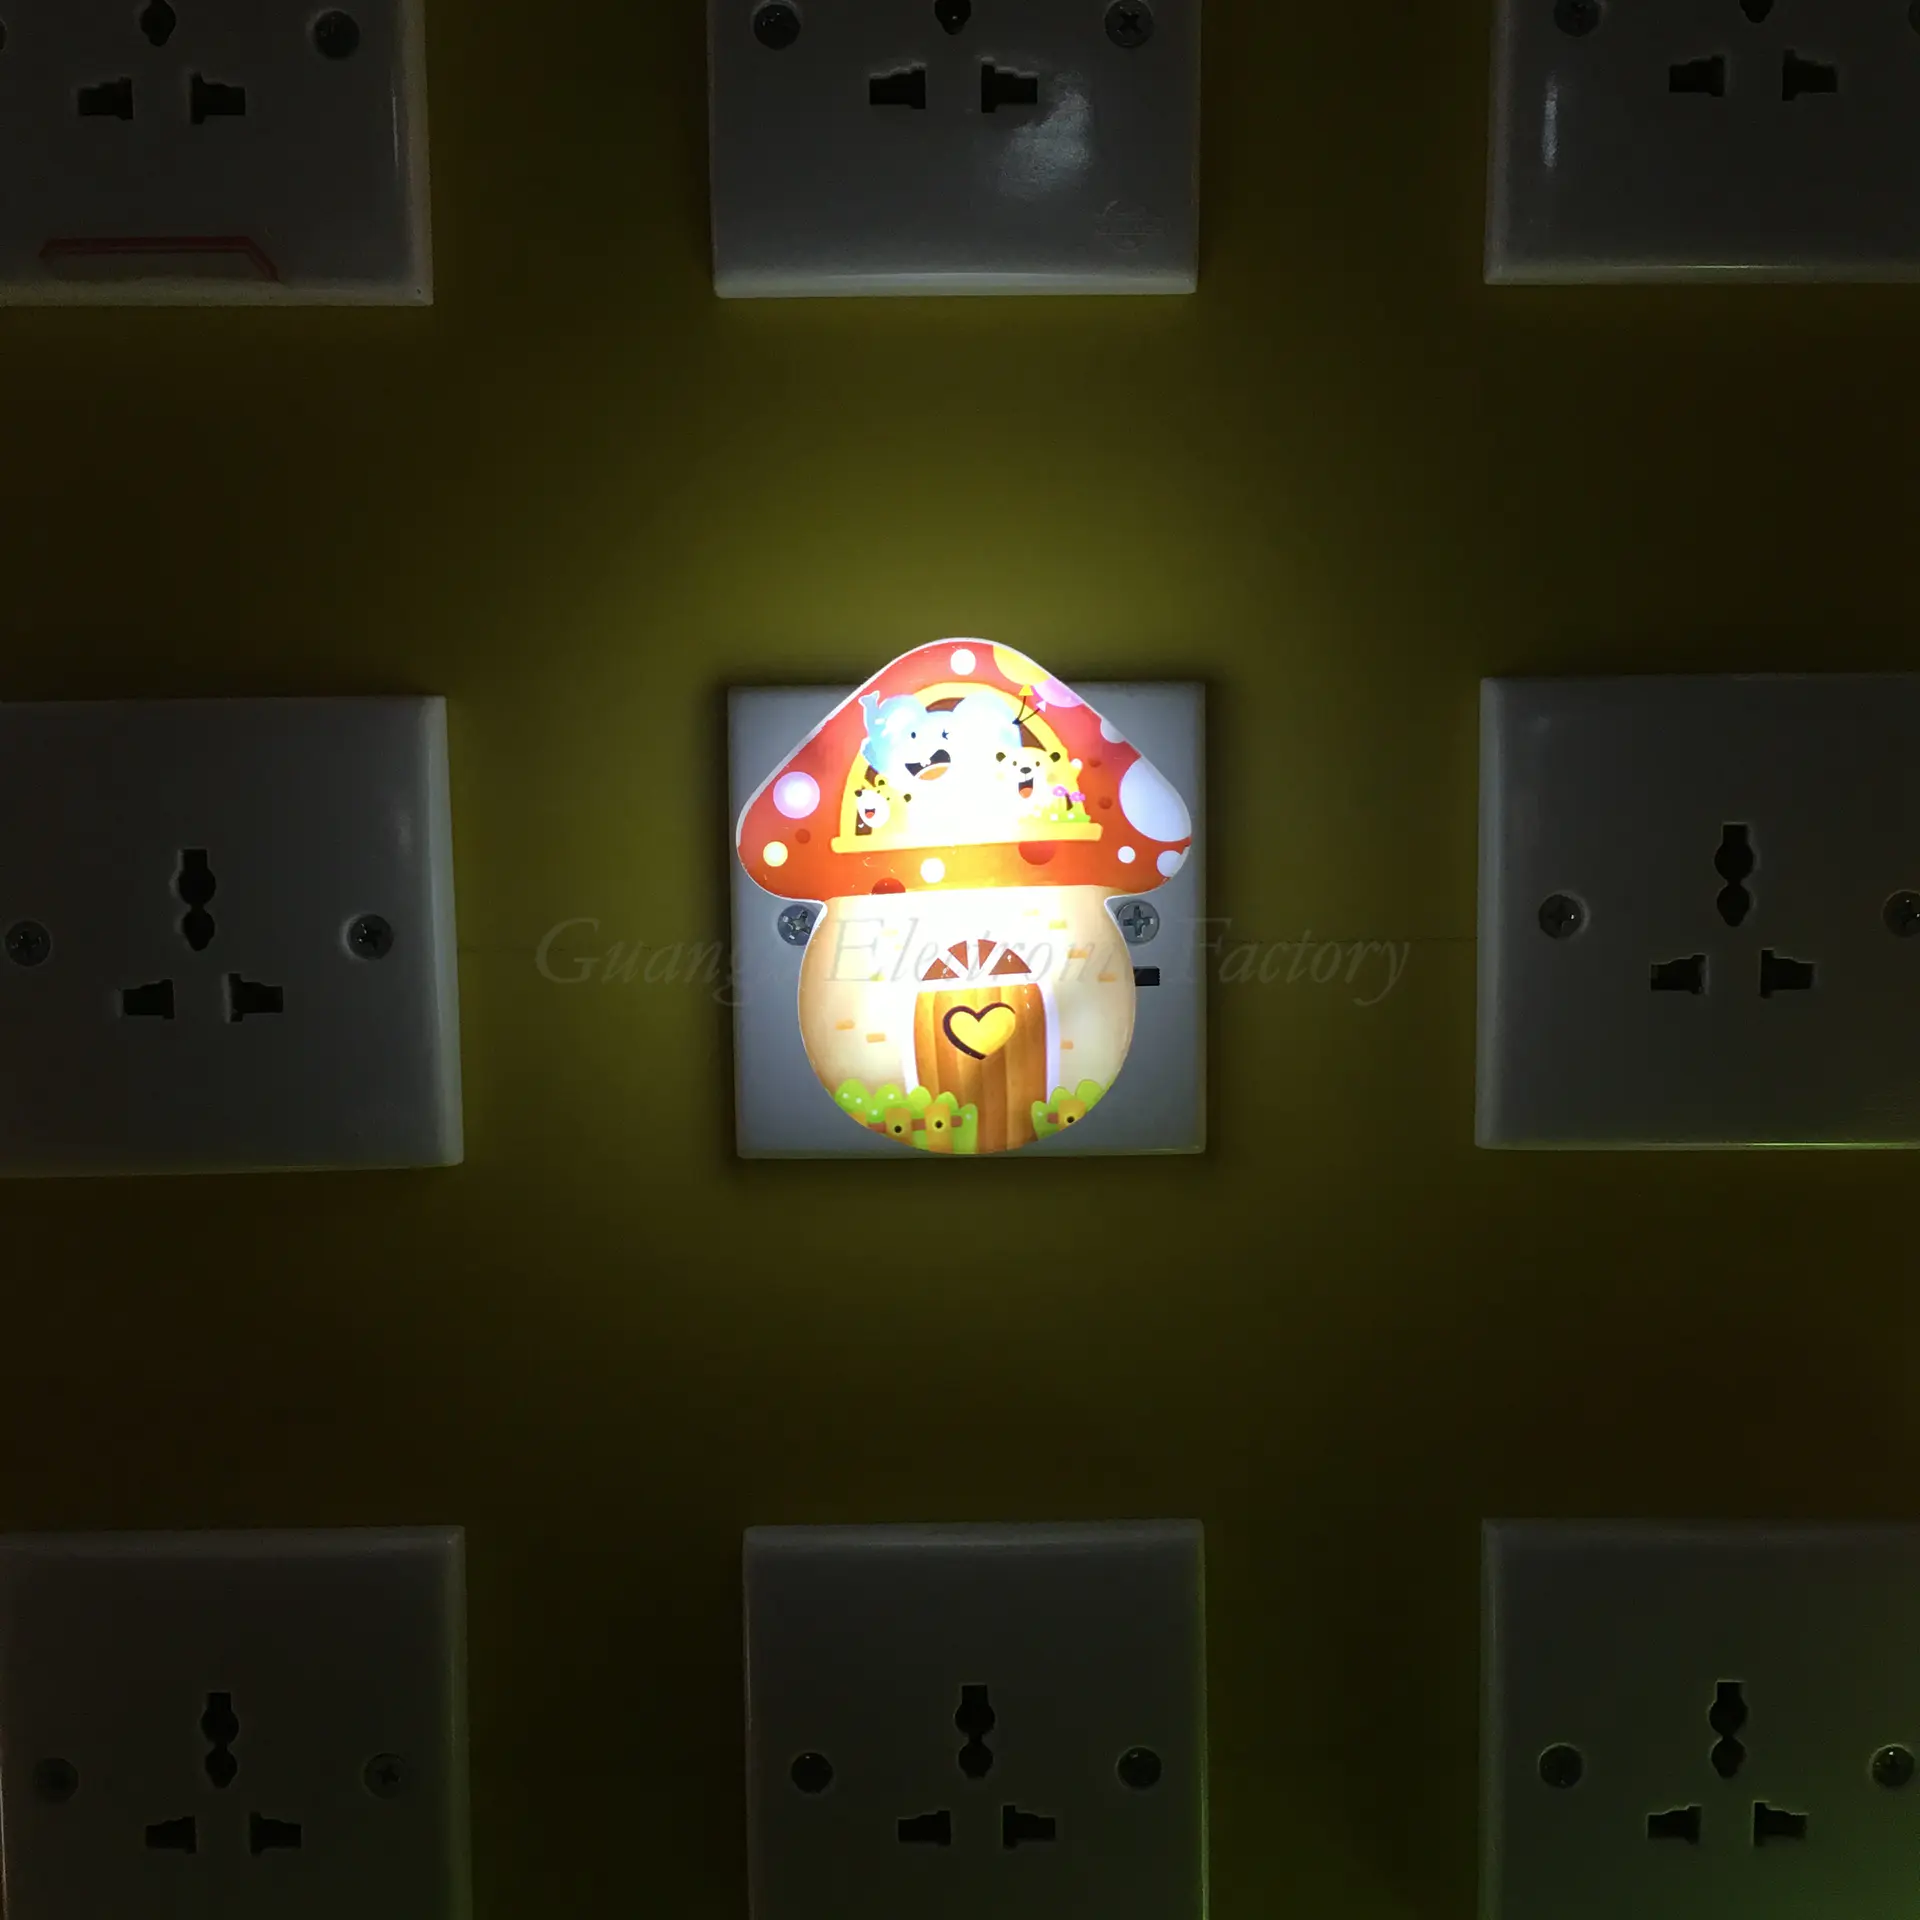 W078 mini switch plug in mushroom LED night light cute gift For Children Baby Bedroom